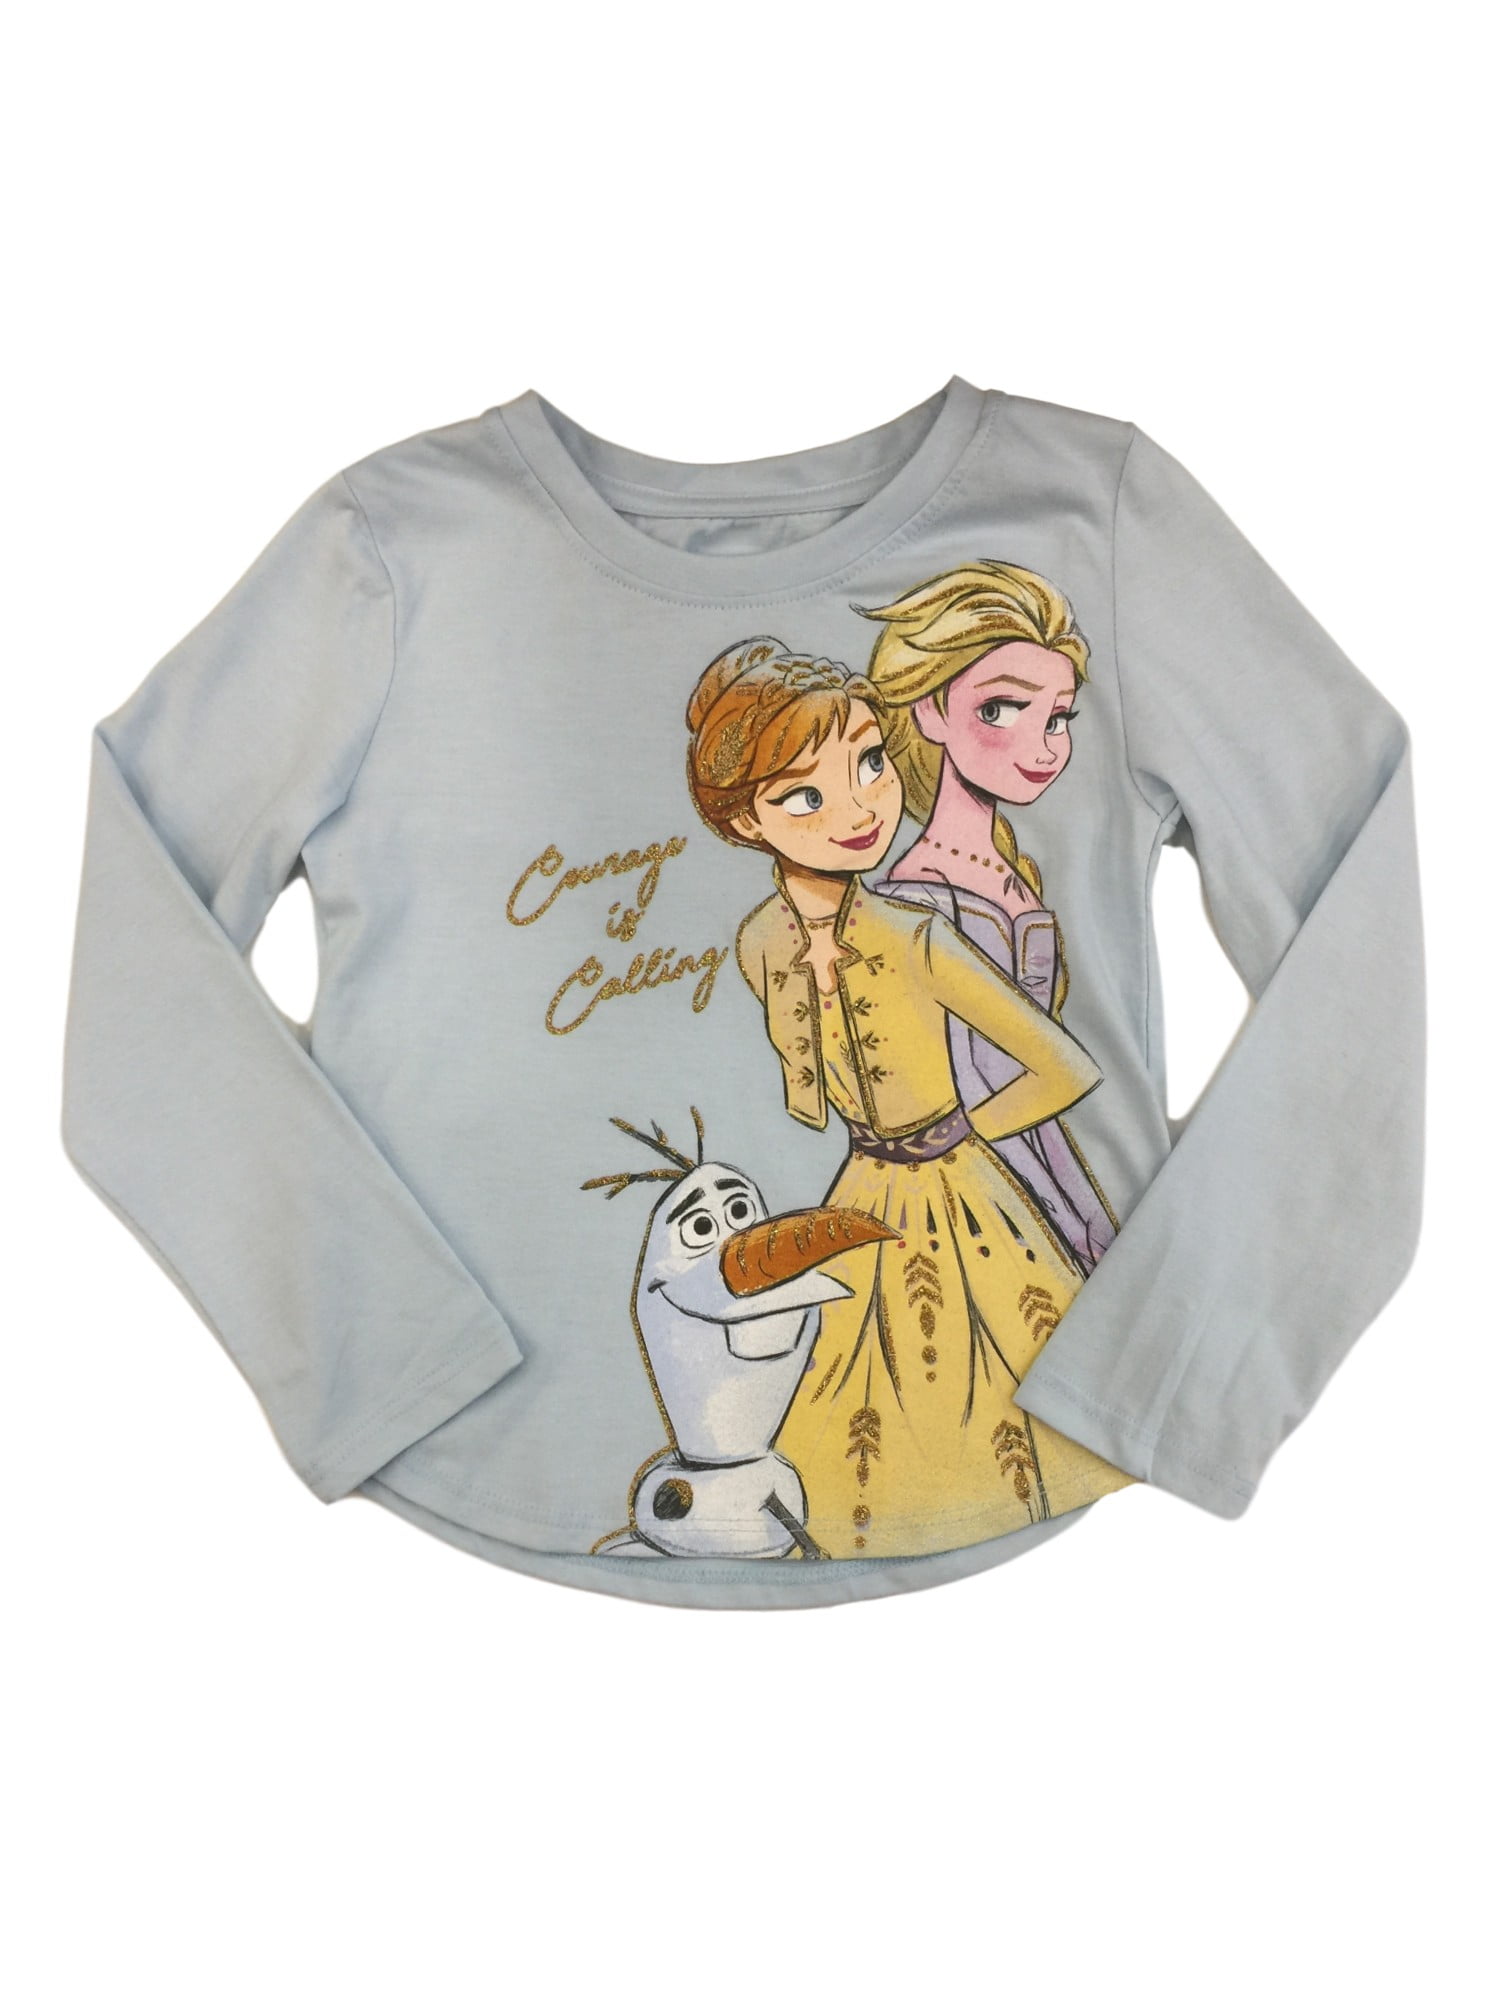 NEW! Toddler Girls T-Shirt Halloween Disney Frozen Olaf Boo 2T or 4T 